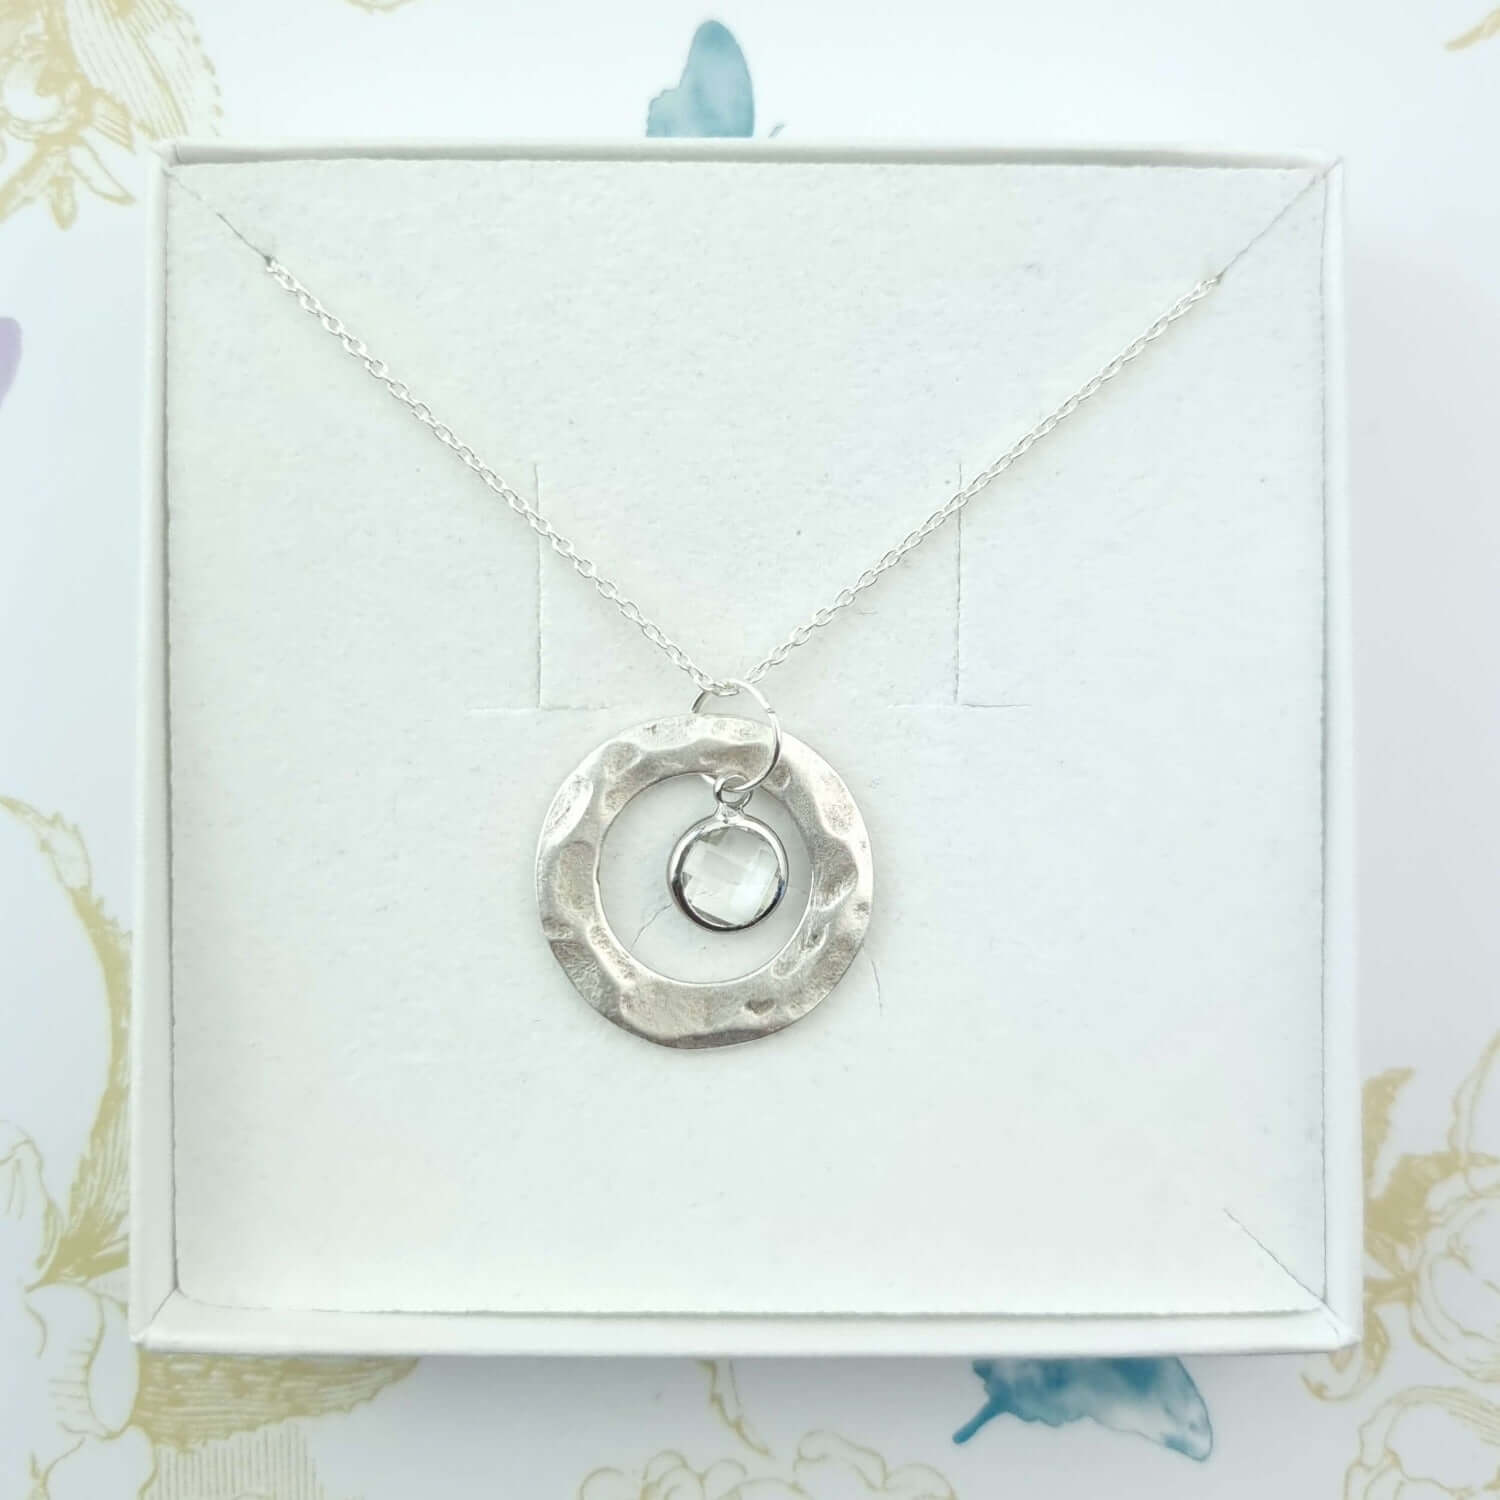 April diamond stone necklace in a gift box